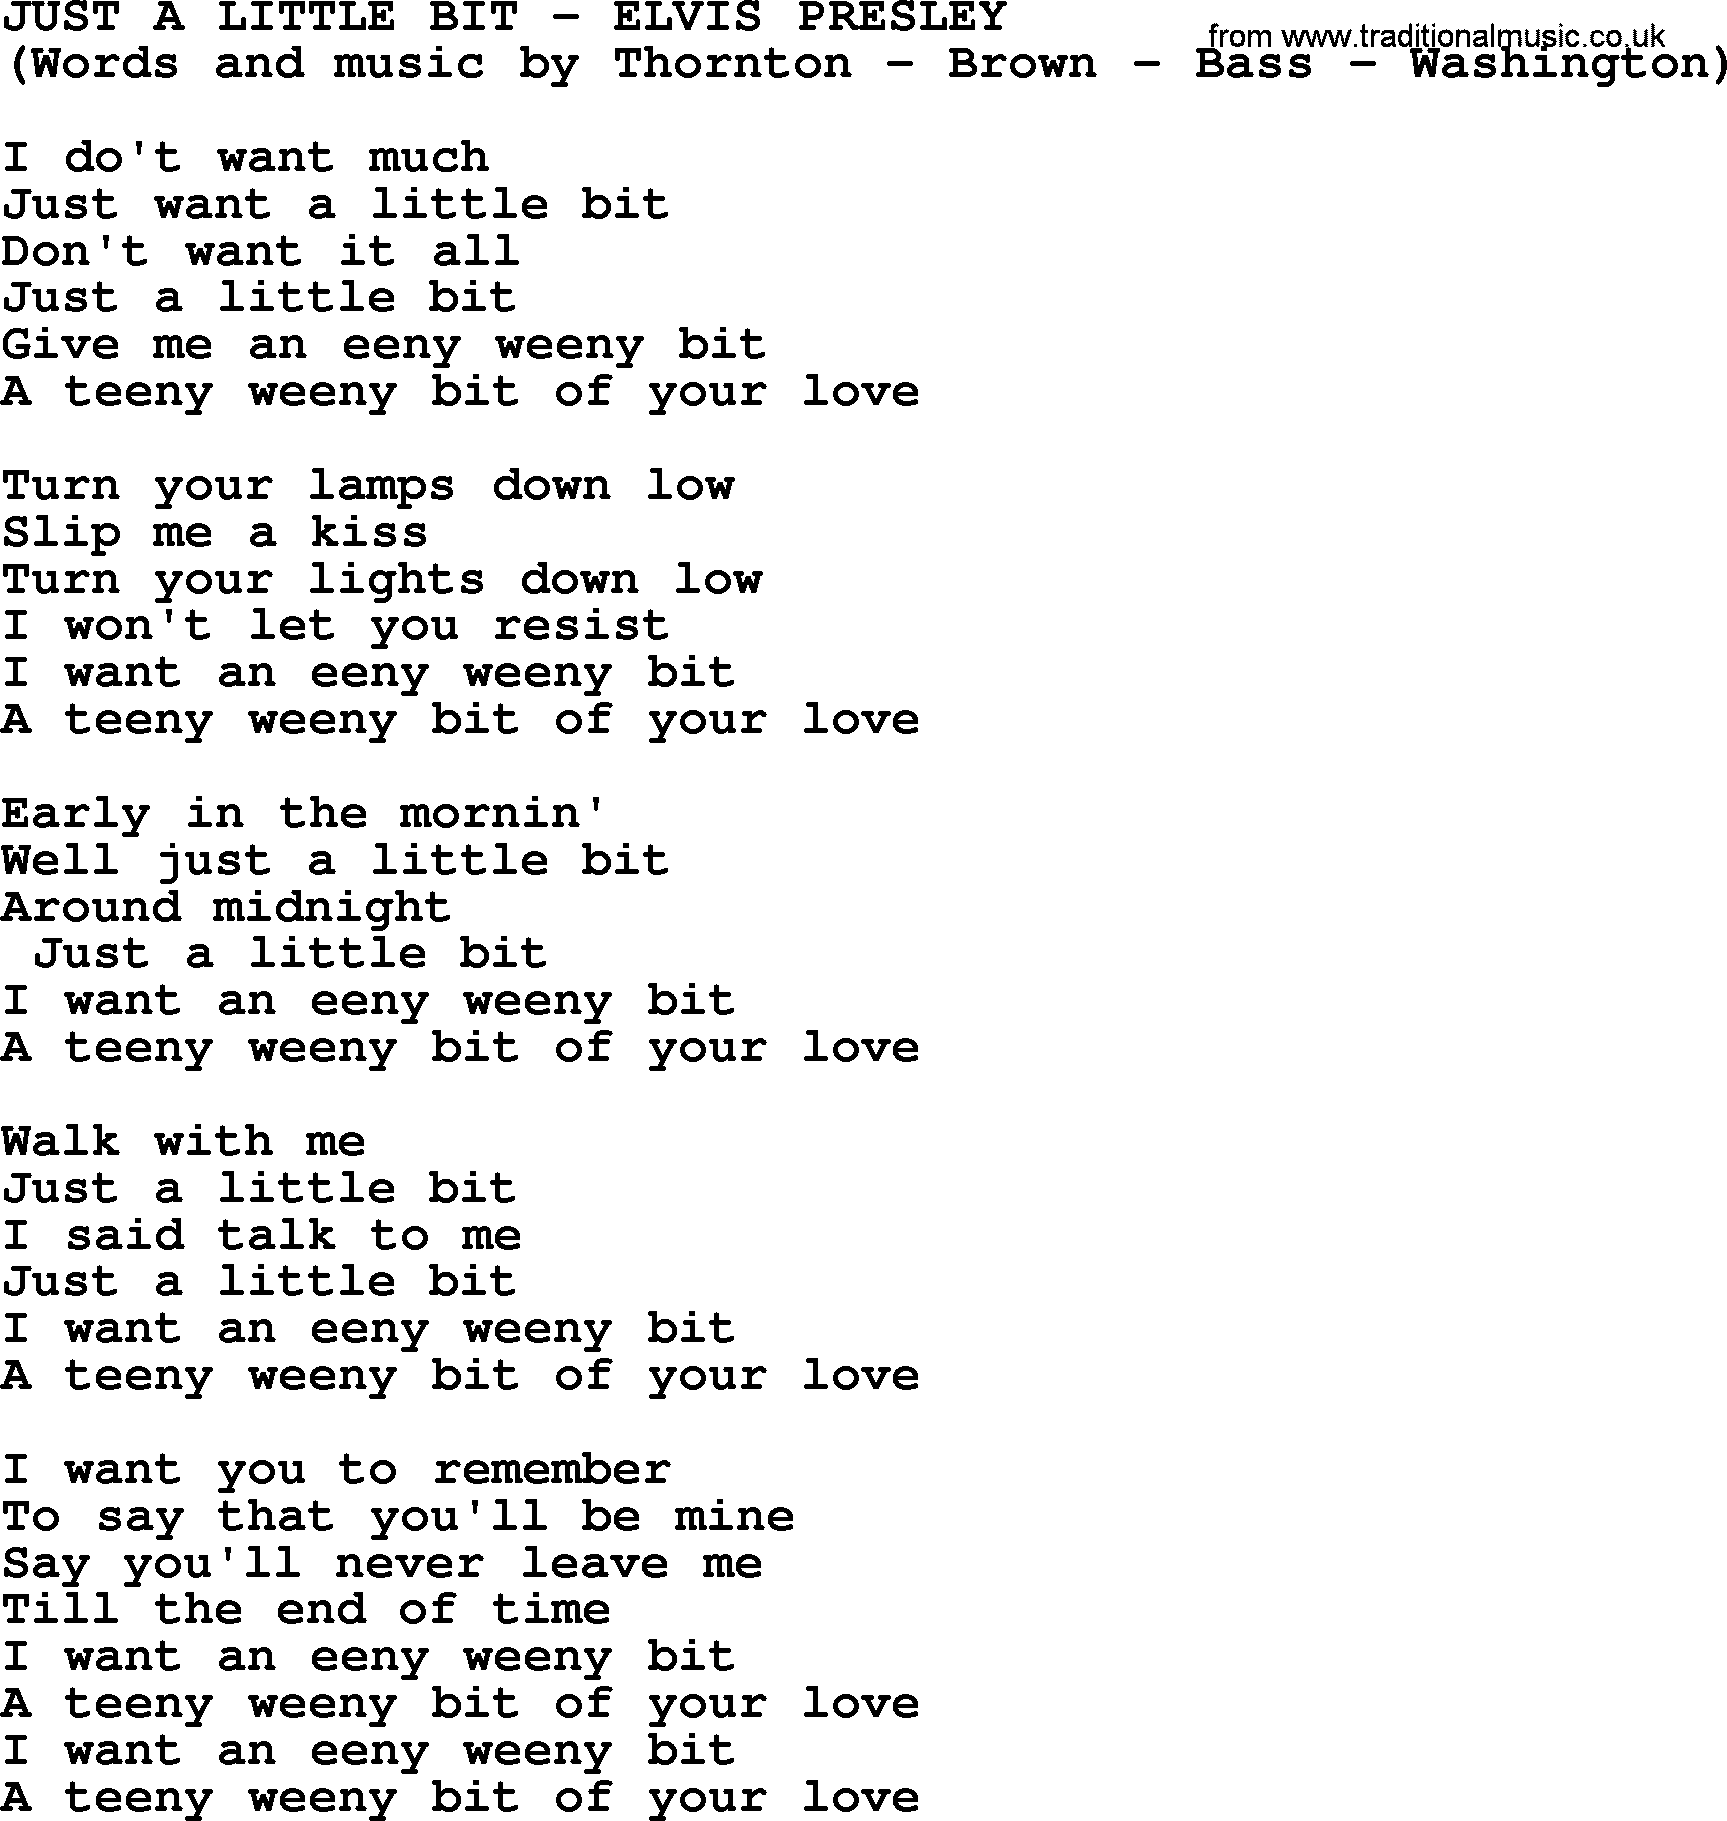 Elvis Presley song: Just A Little Bit lyrics